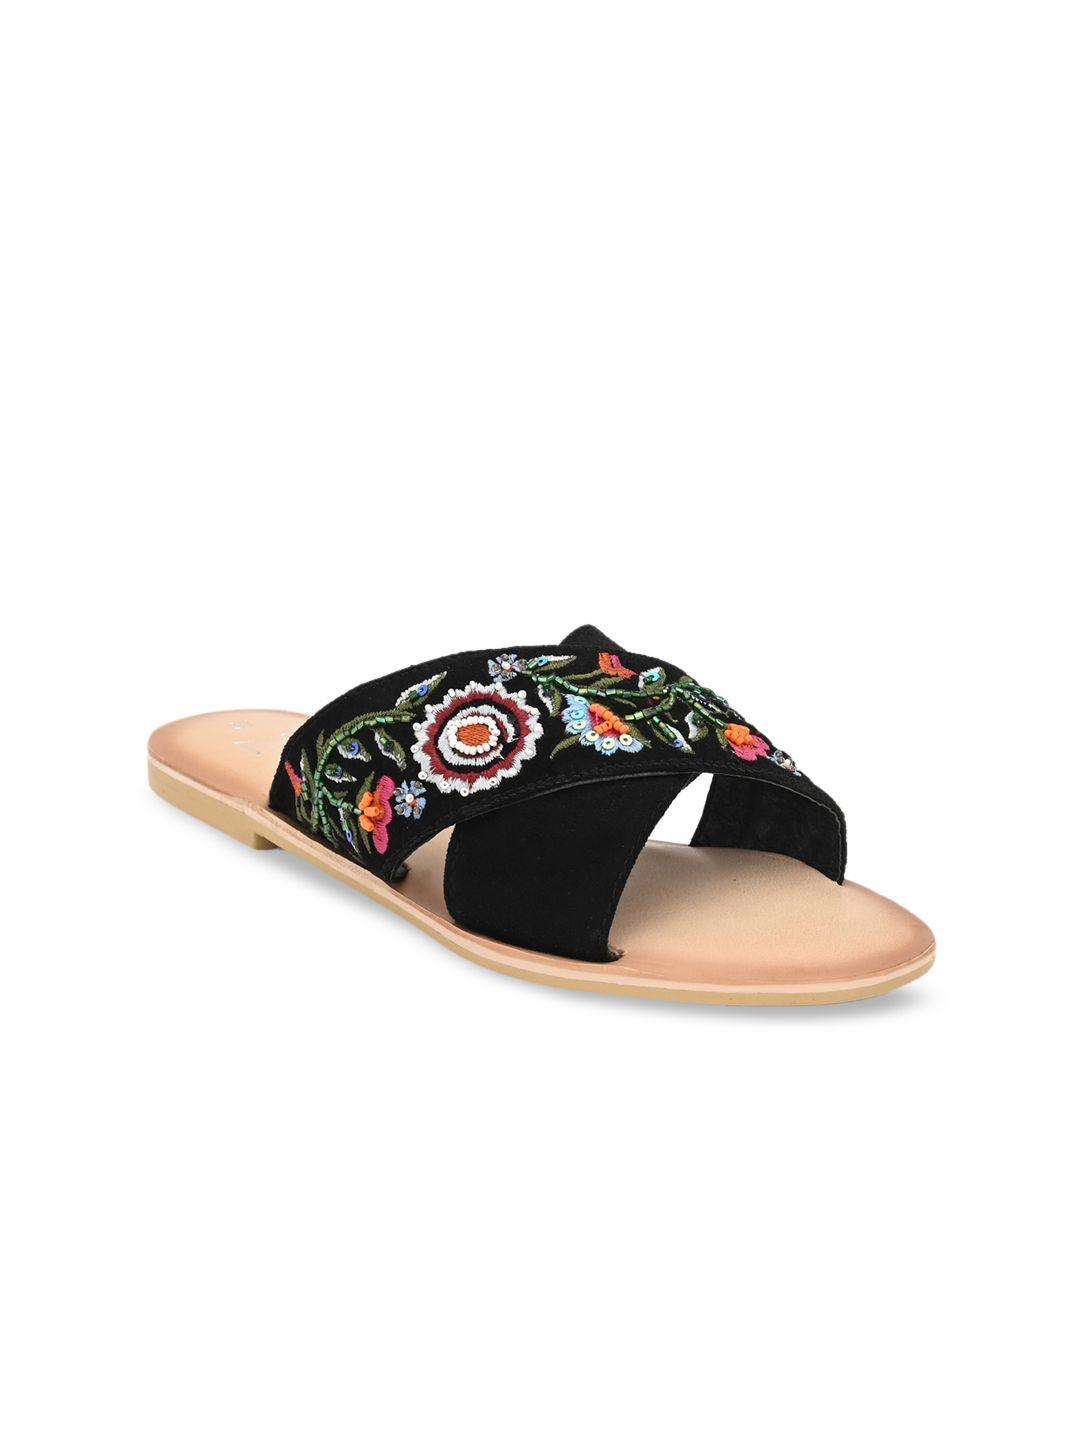 zebba women black embellished pu open toe flats